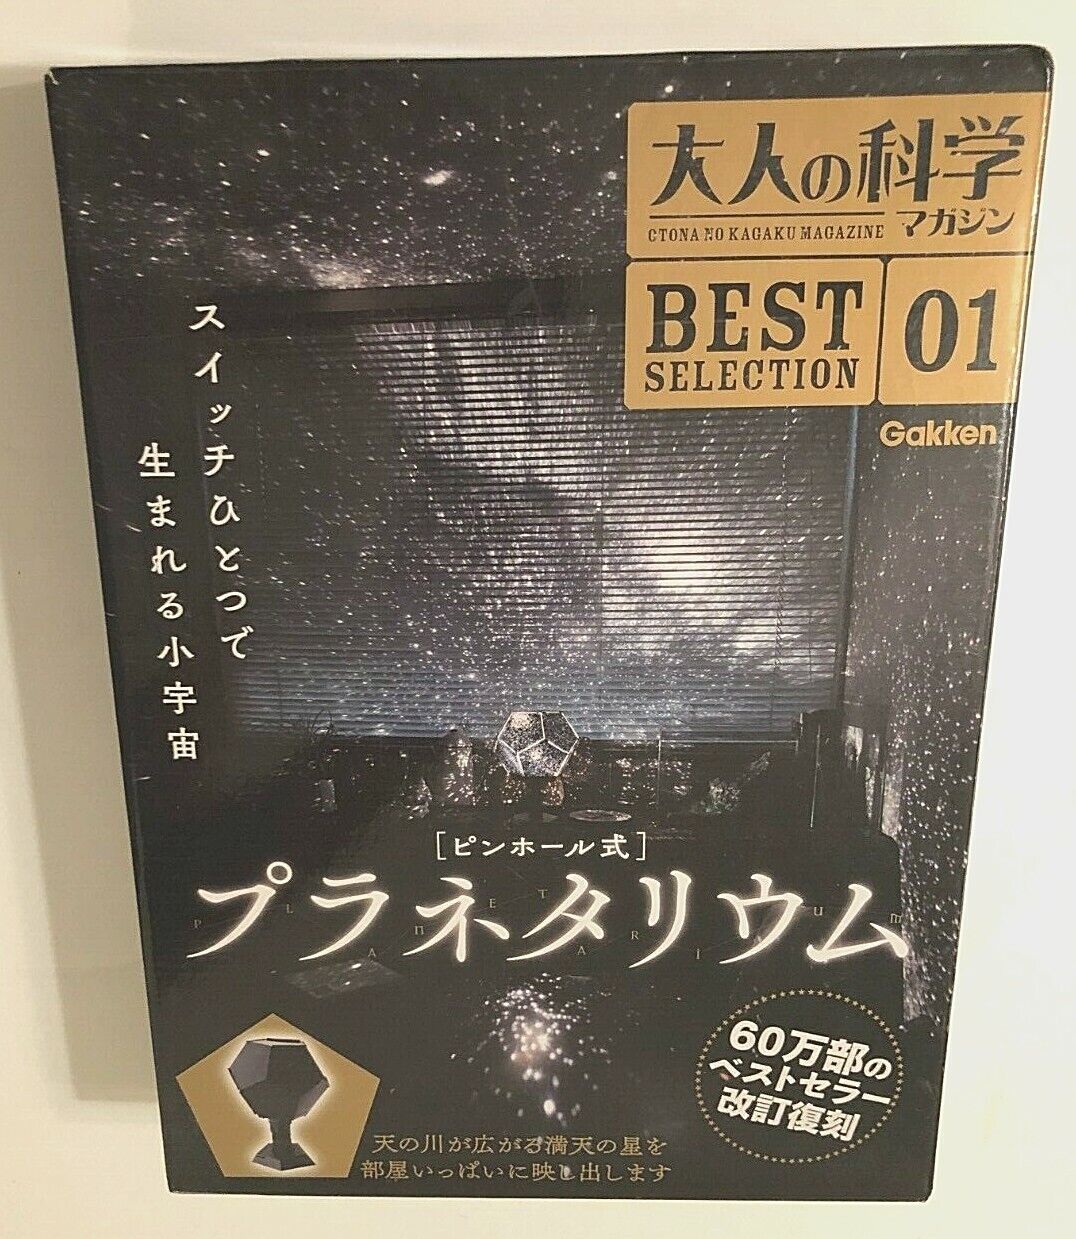 Gakken Best Selection 01 Kagaku Adult Science Magazine Pinhole Planetarium Kit